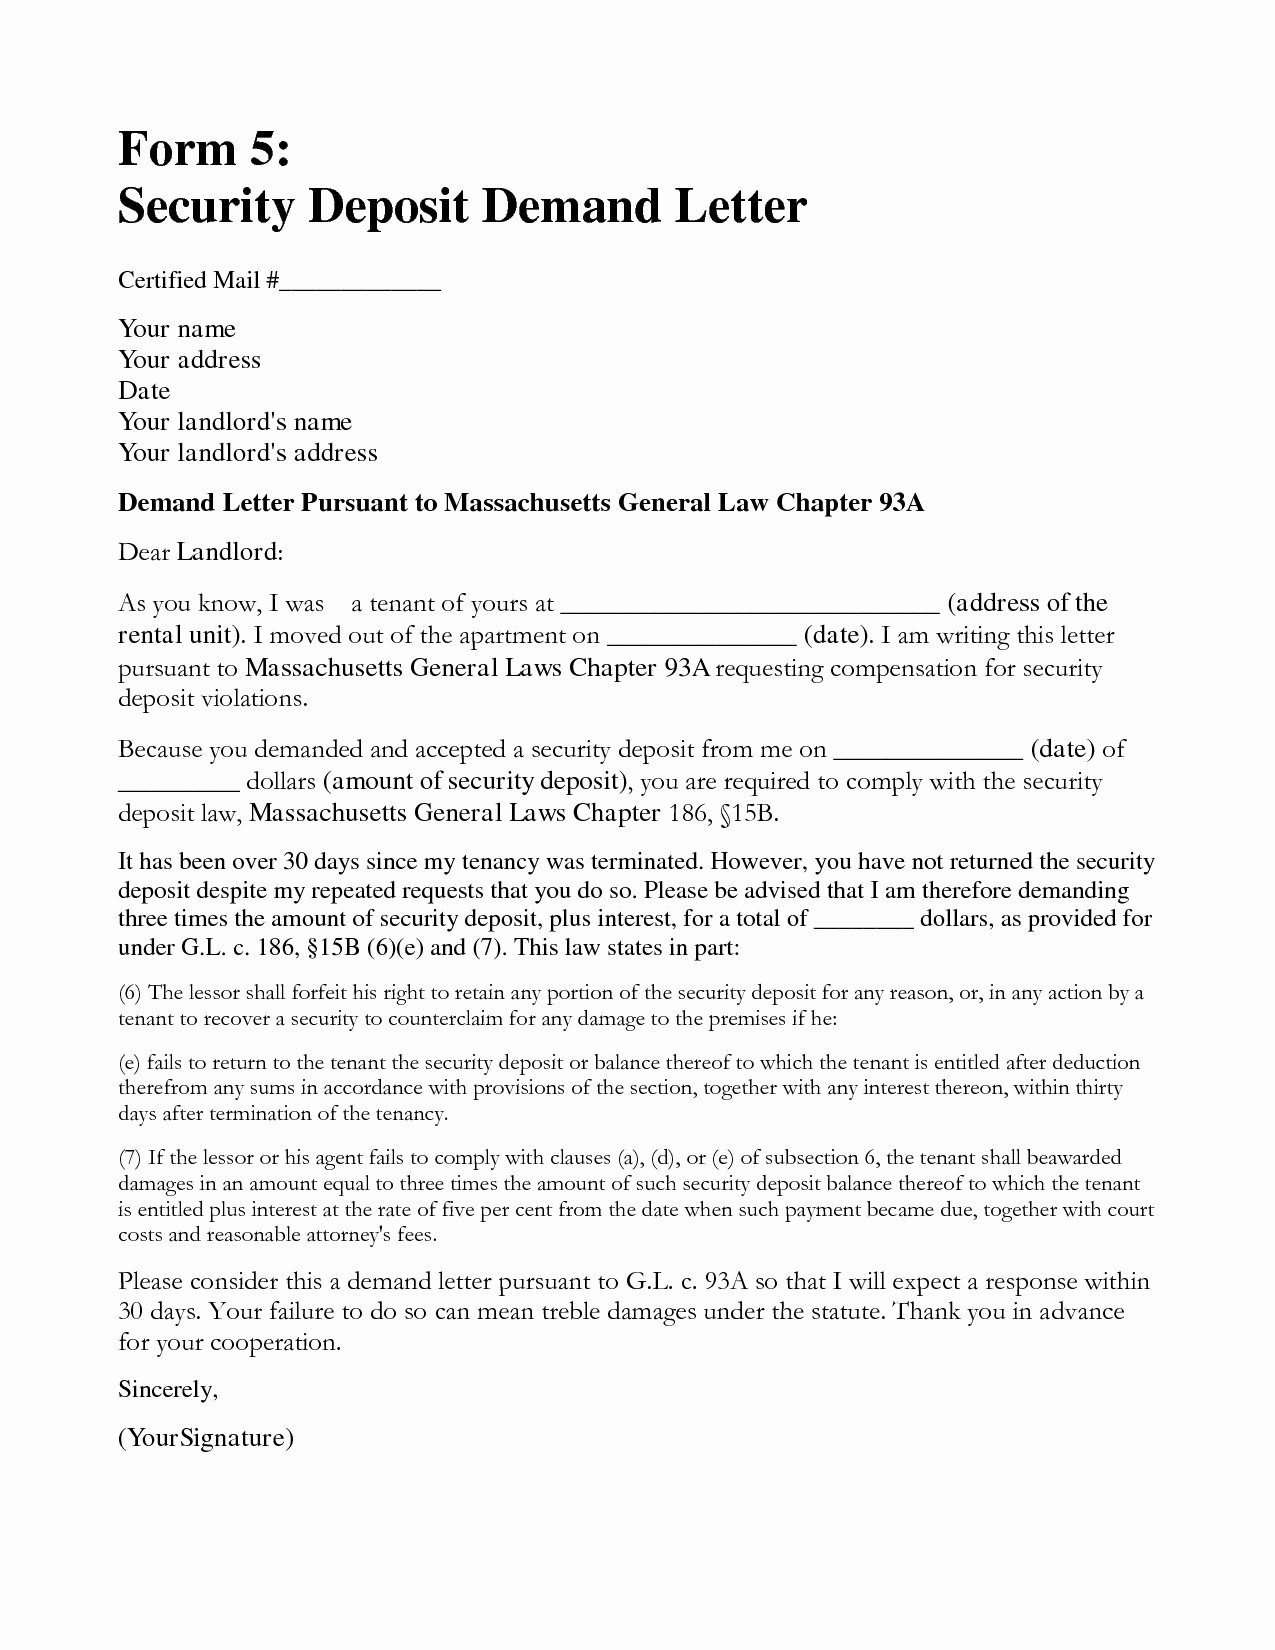 Tenant Letter to Landlord Fresh Demand Letter to Landlord Template Samples